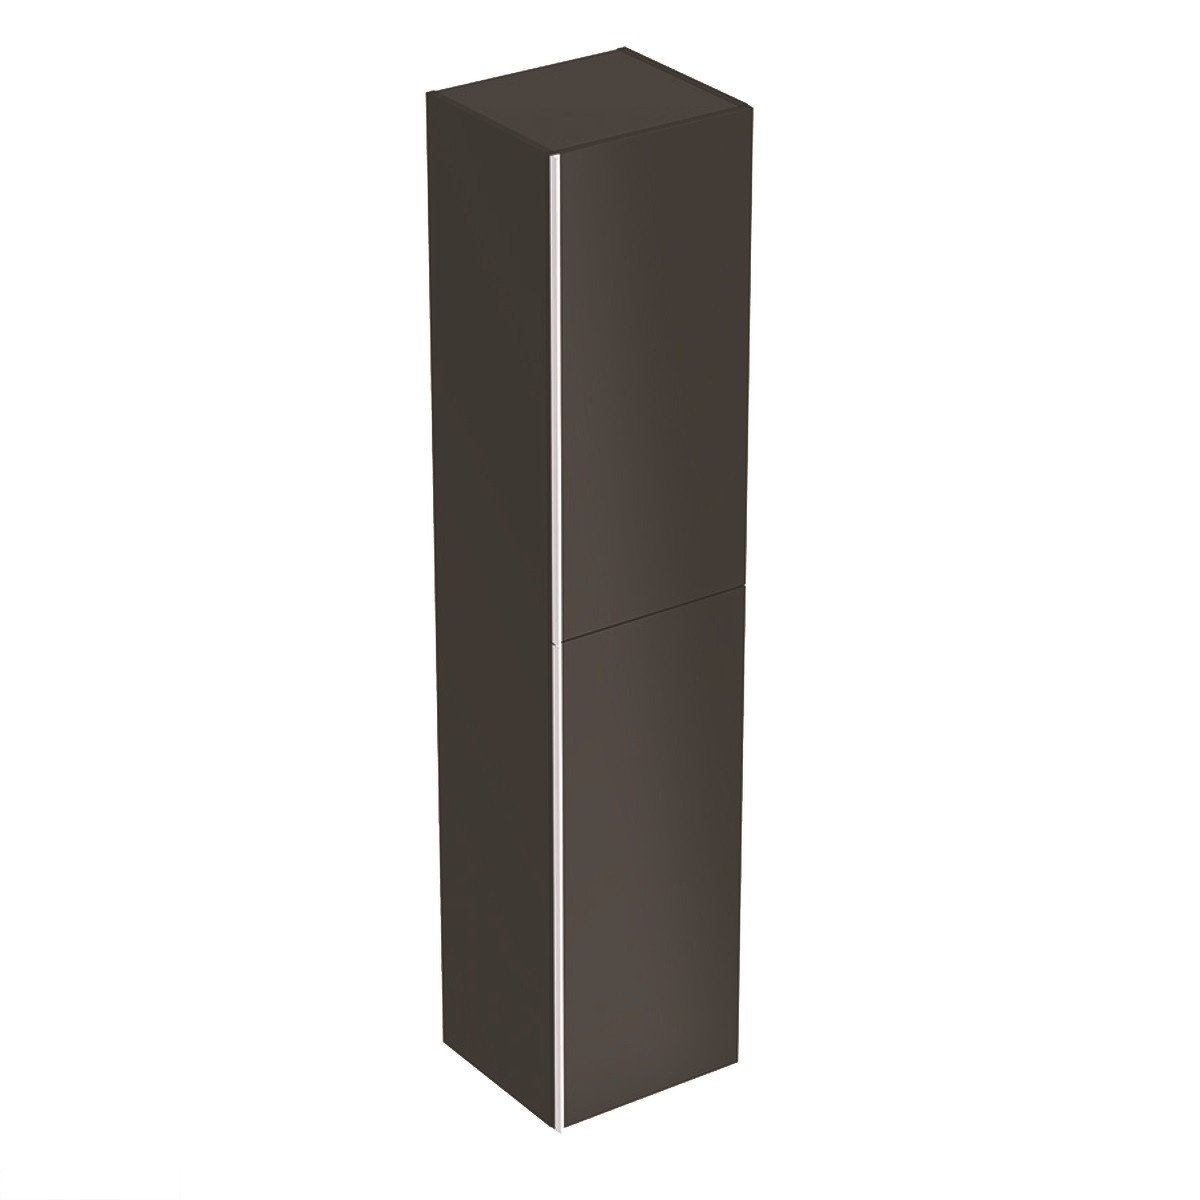 Висока шафа Geberit Acanto з двома дверима: корпус: лакований матовий/ чорний, фасад: чорне скло 500.619.16.1.